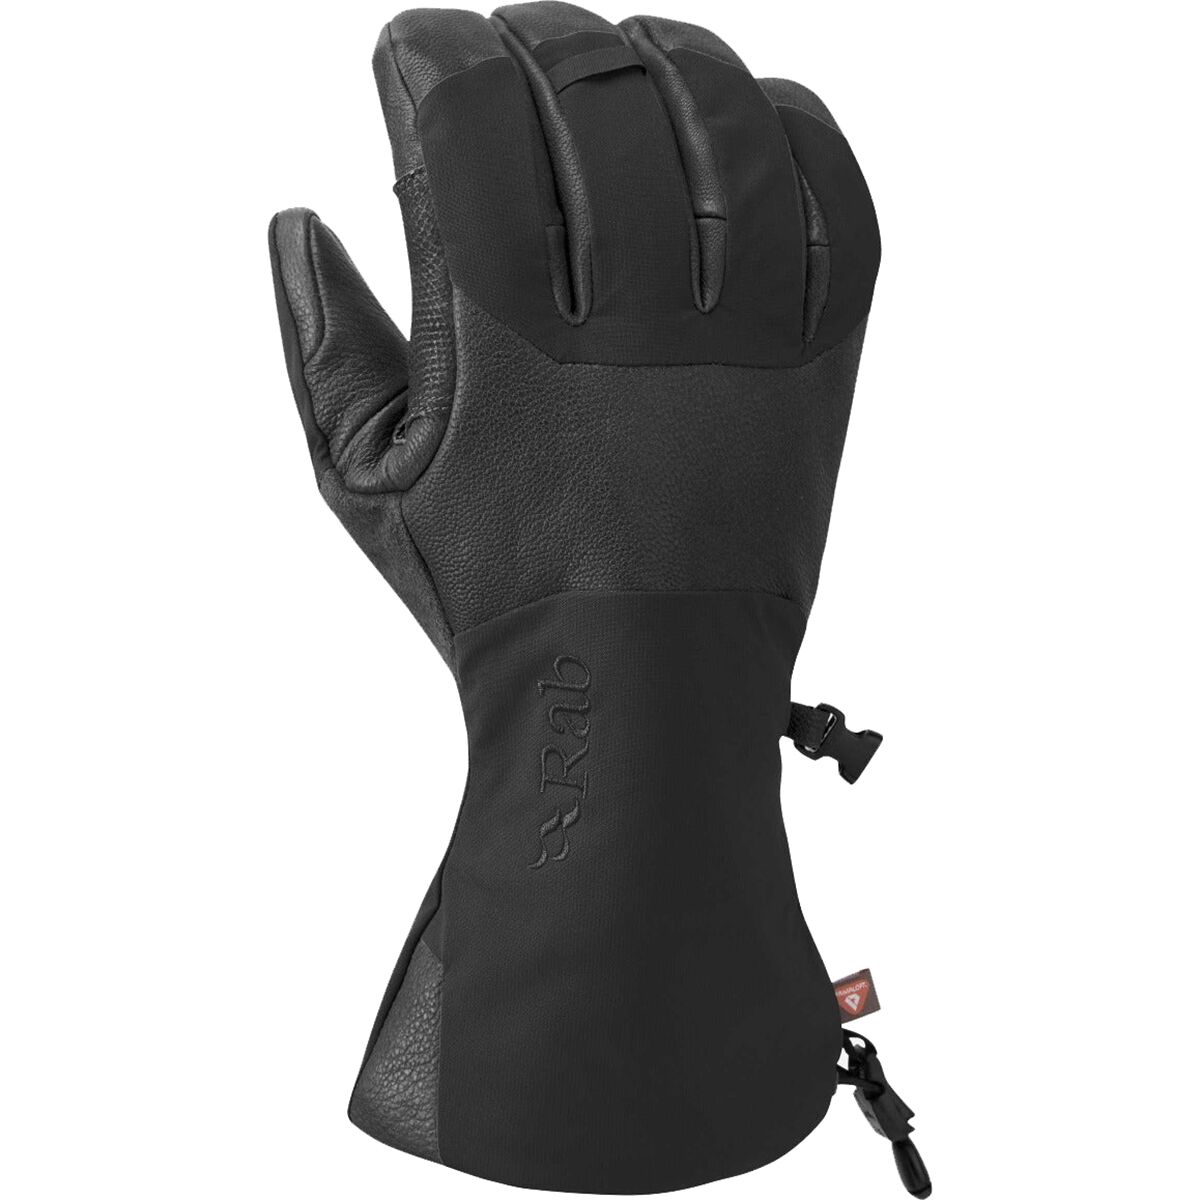 Rab Guide 2 GTX Glove - Men's Black